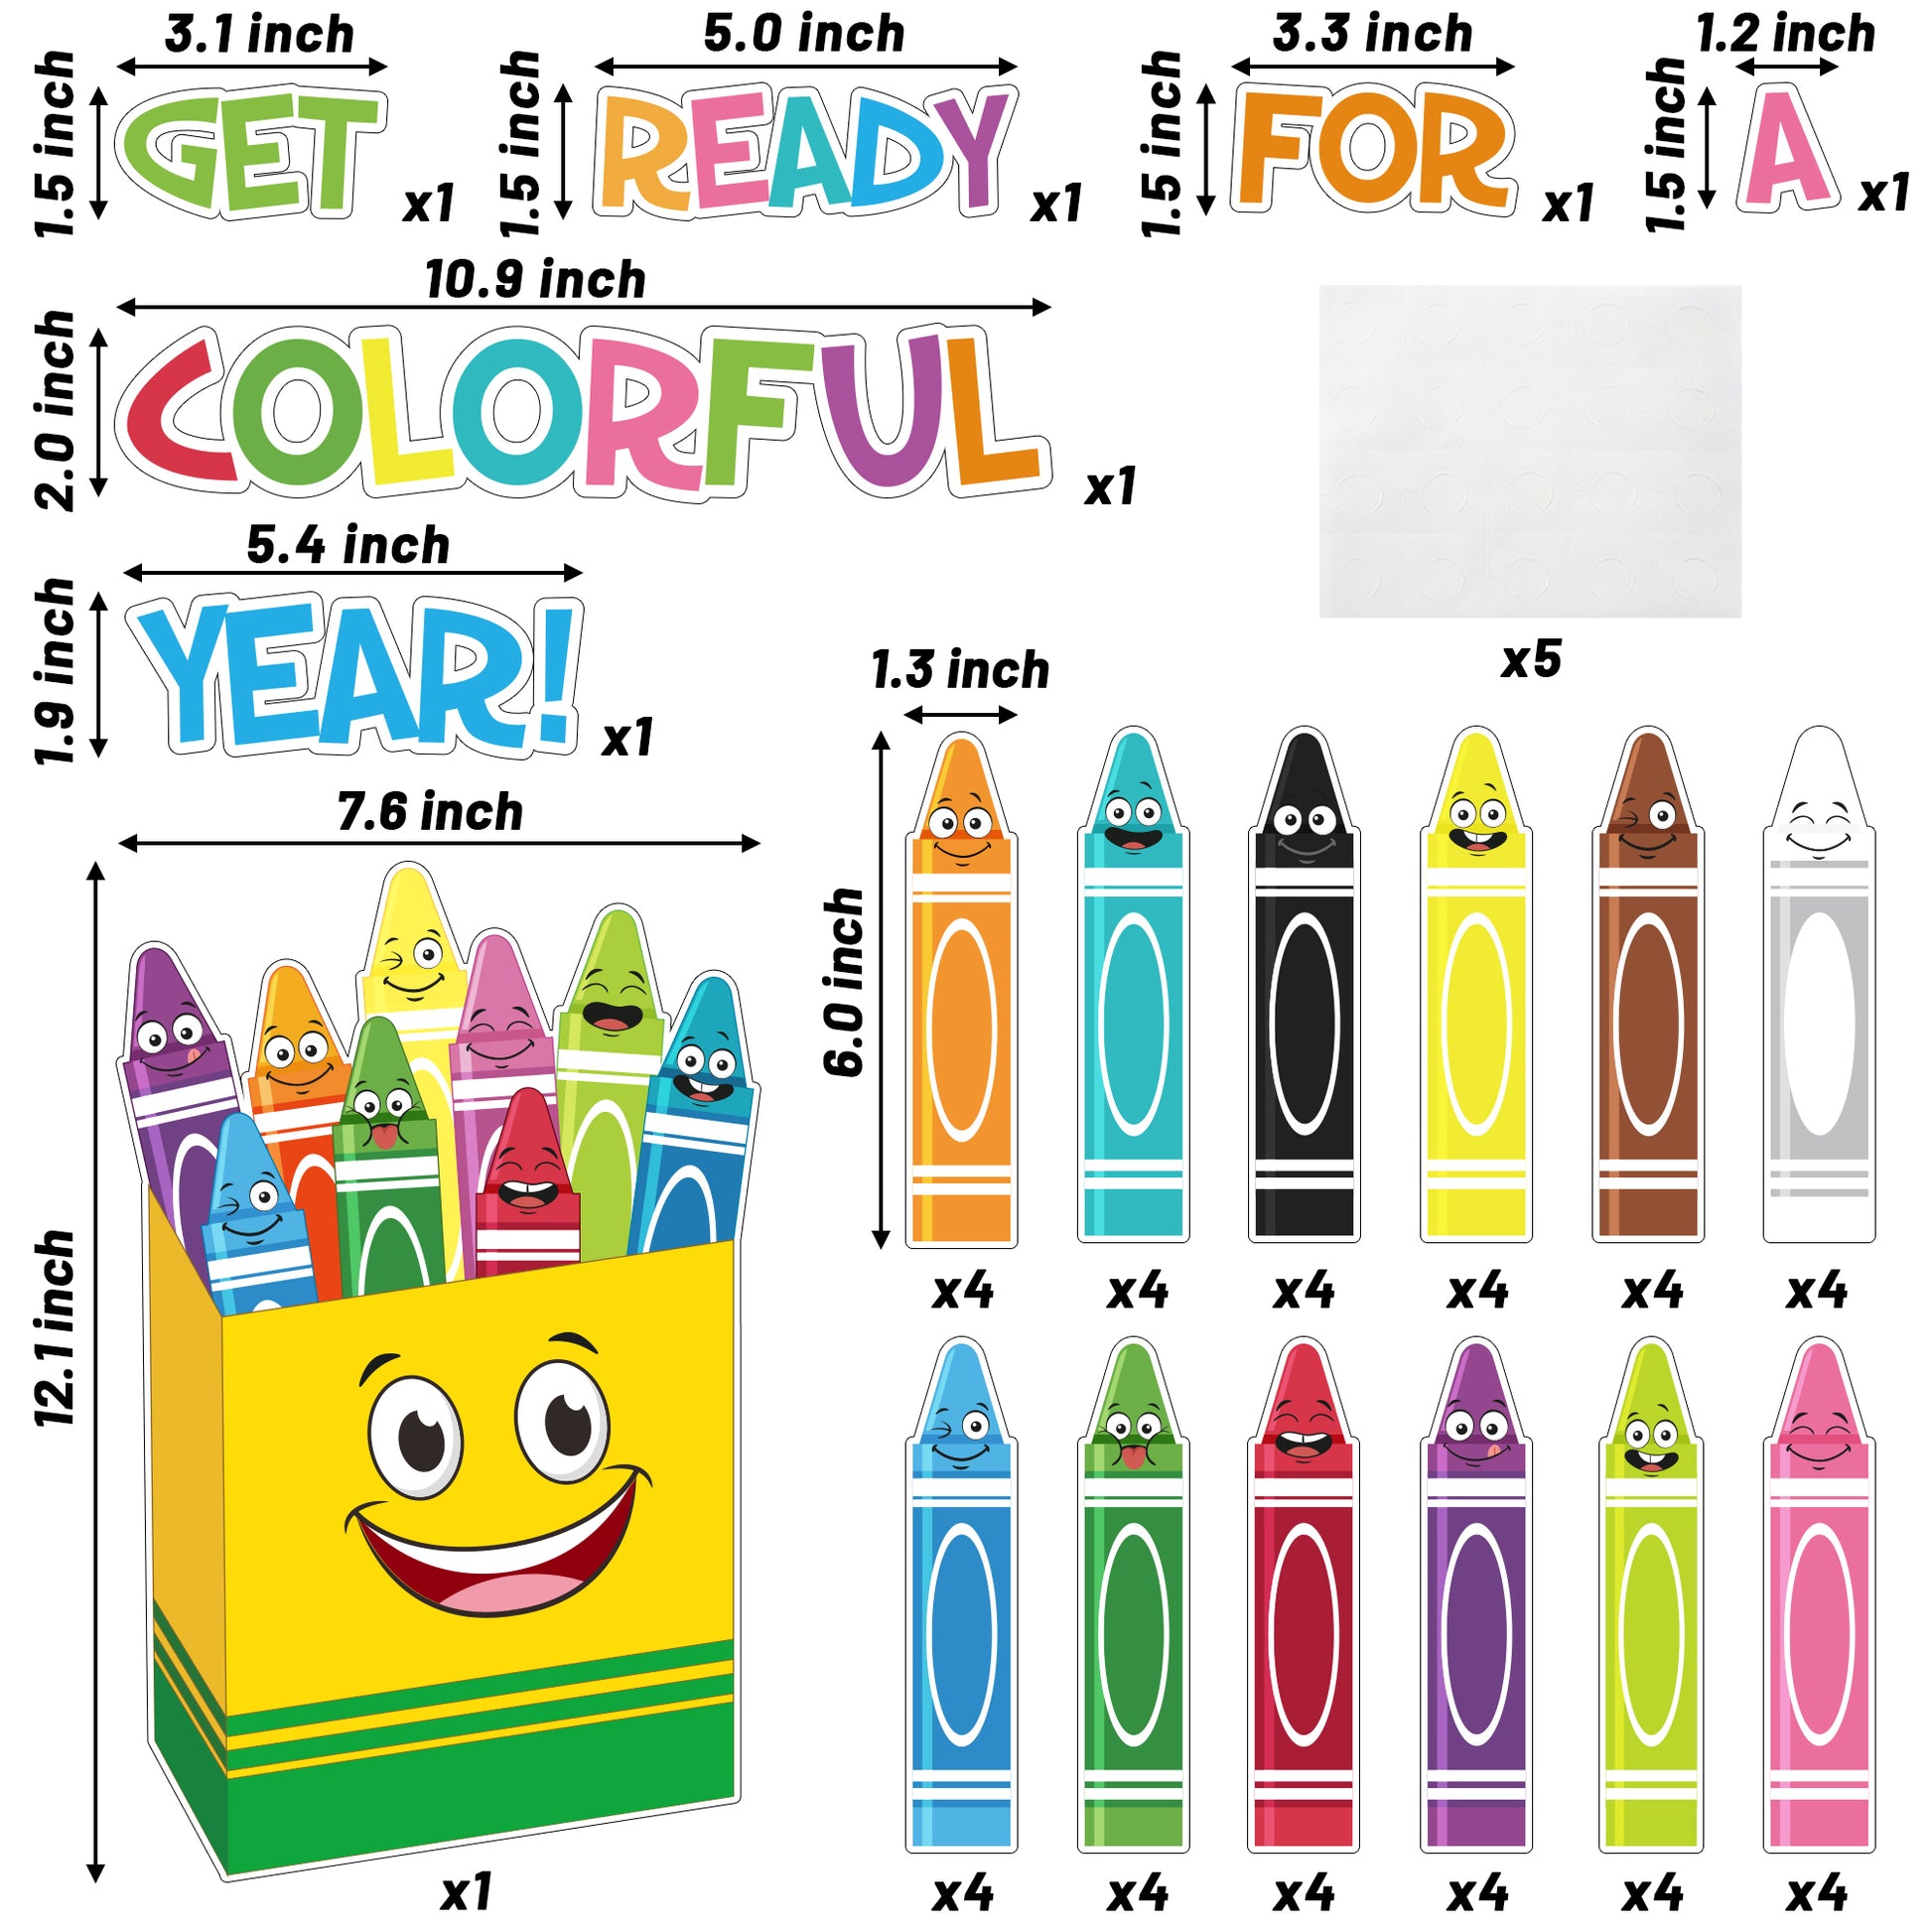 60Pcs Crayon Cut-Outs Crayon Back to School Name Tag Classroom Bulleti –  AsodSway